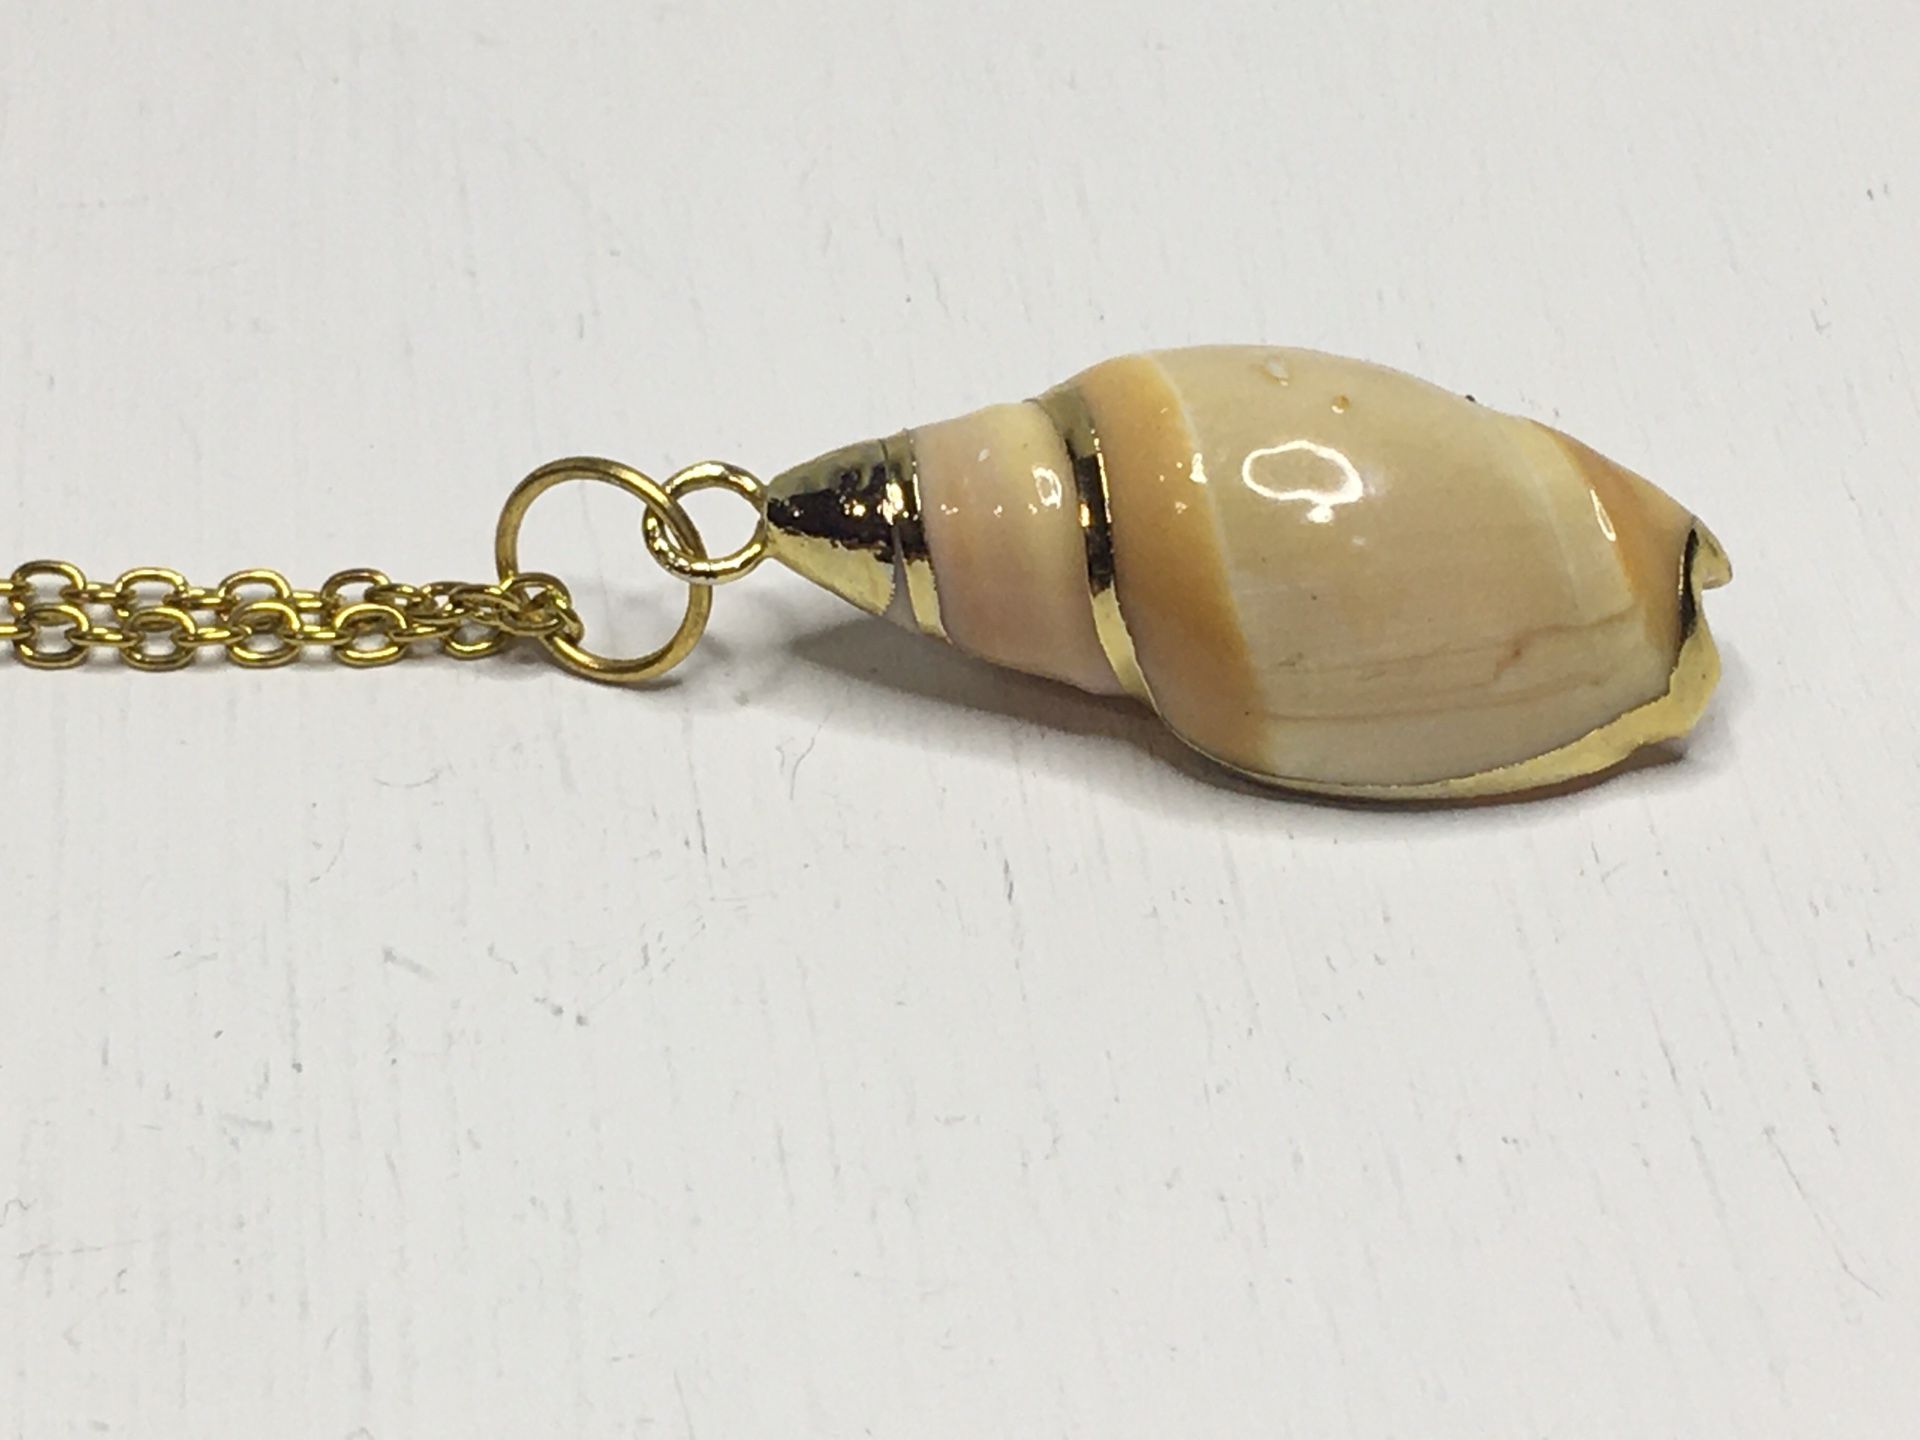 Vintage seashell necklace